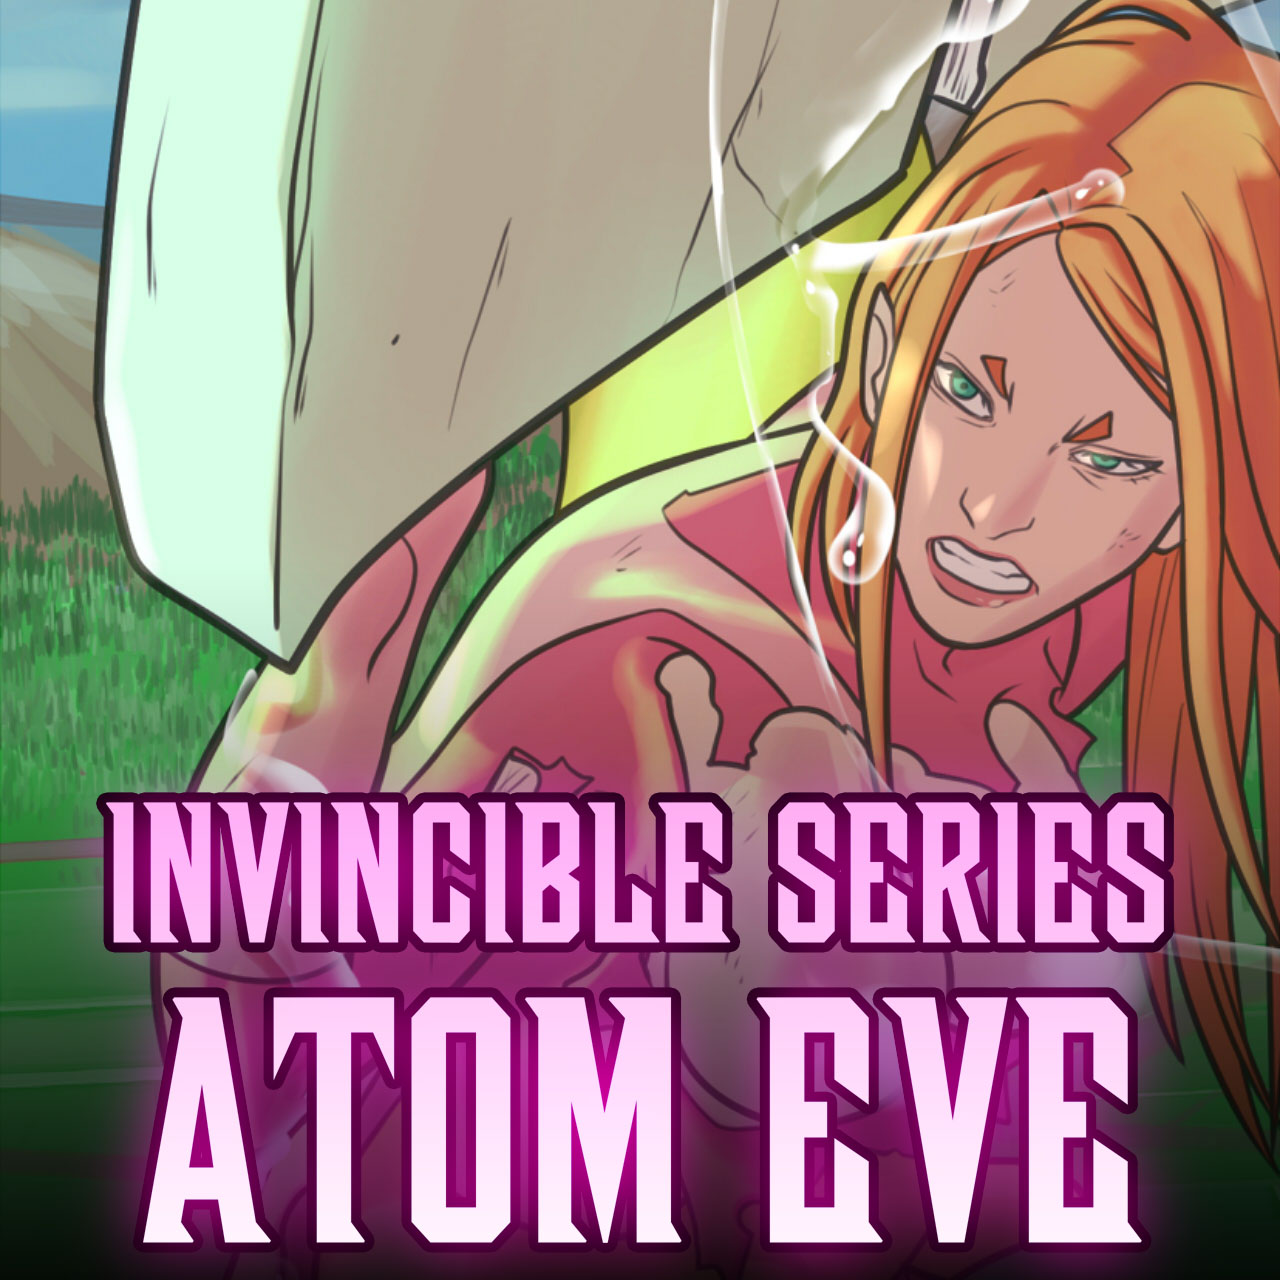 Invincible Series: Atom Eve